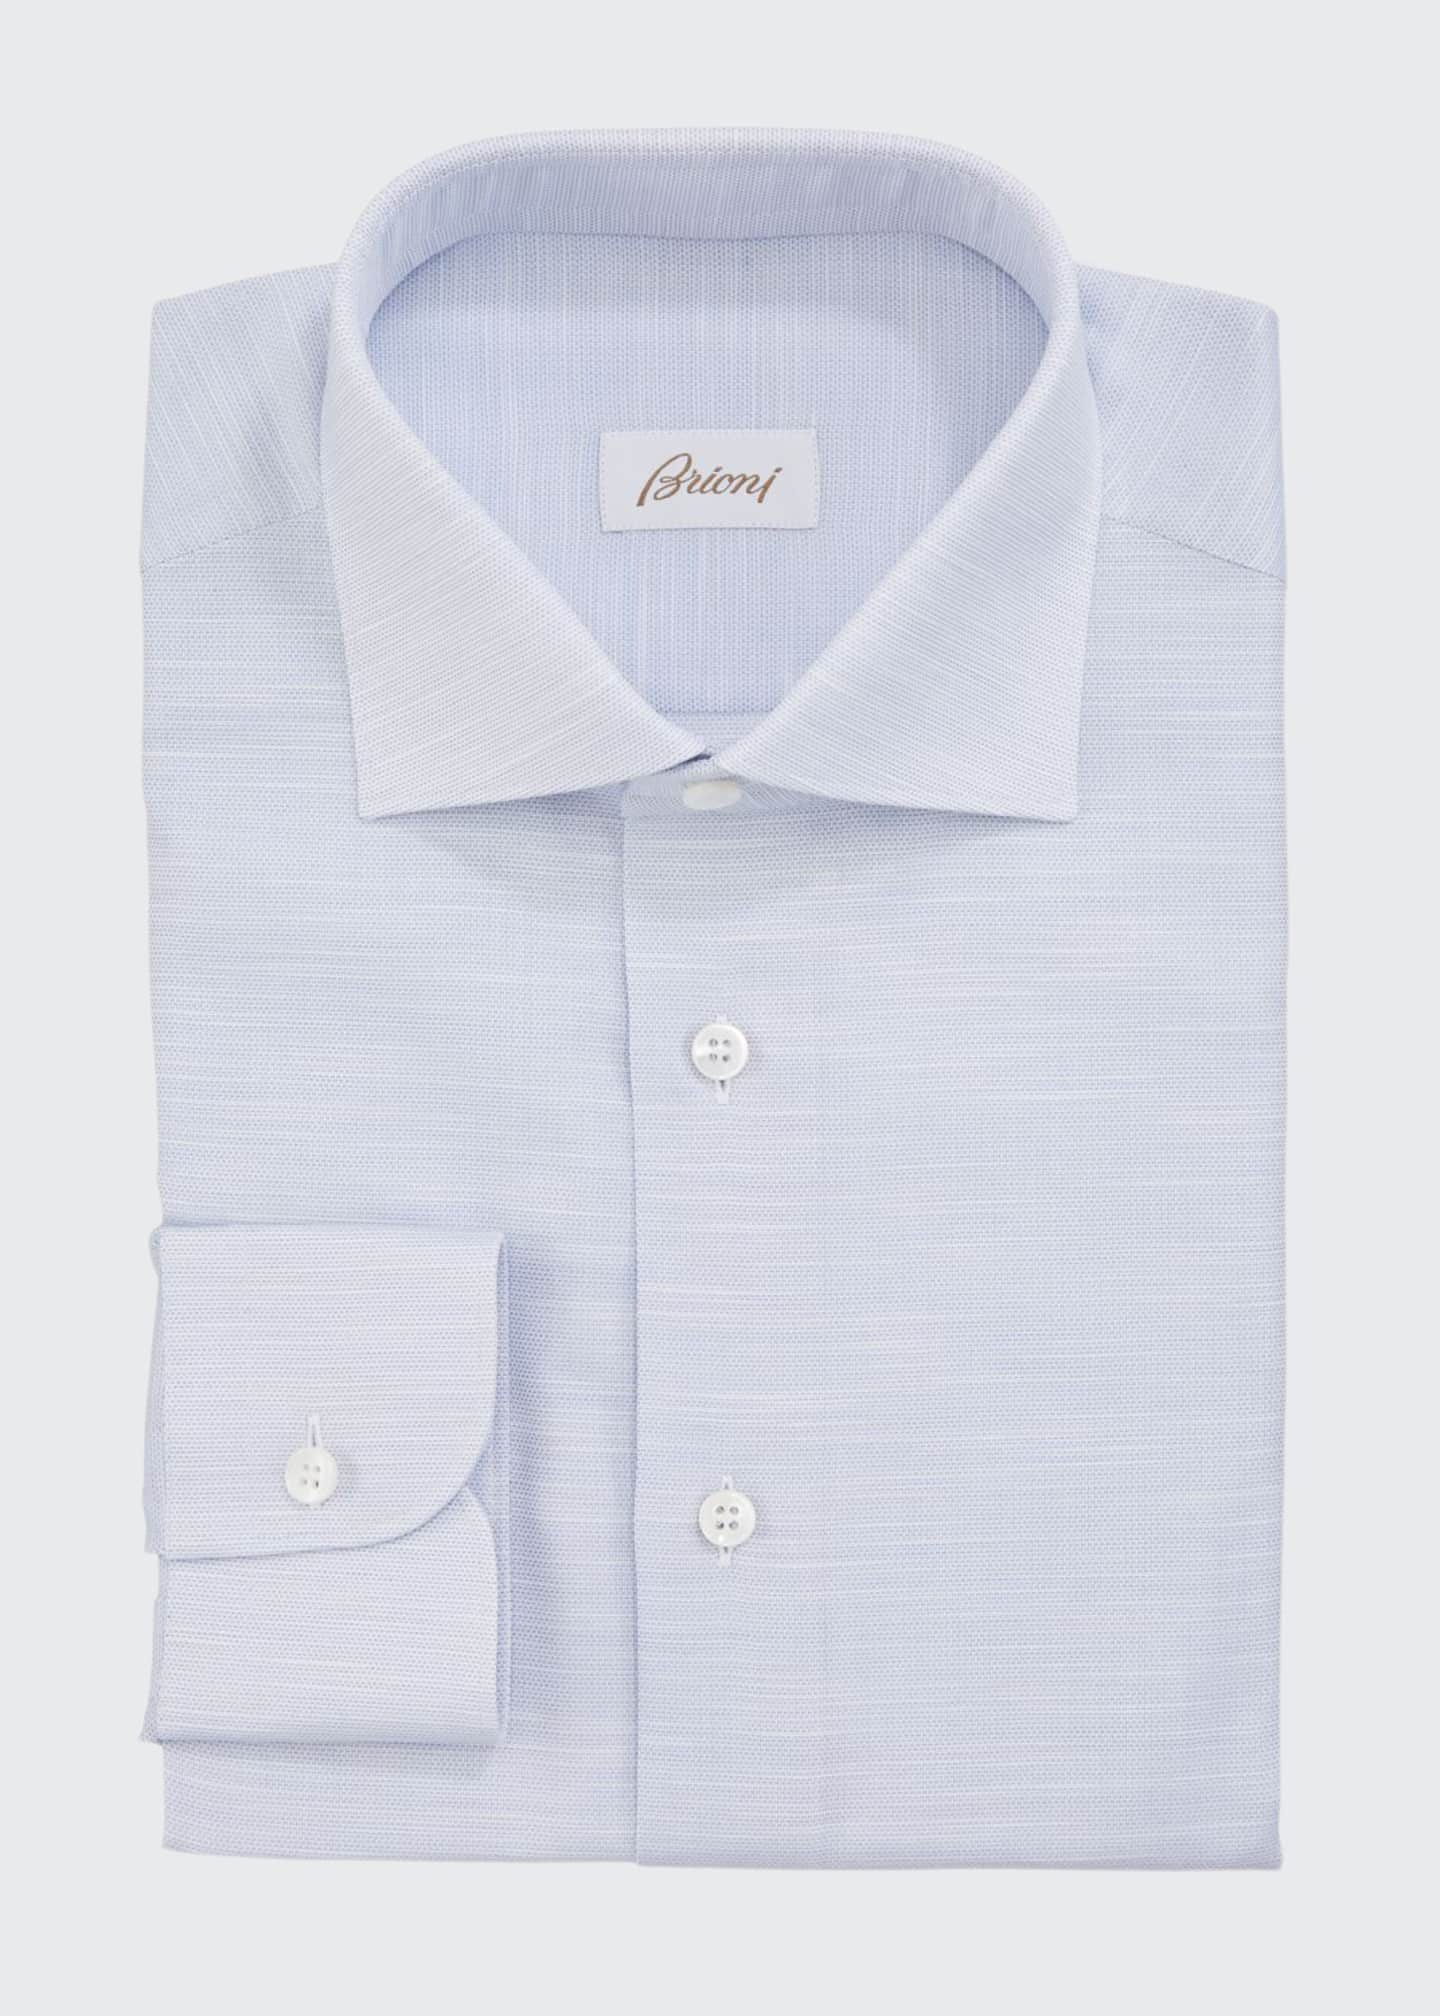 Charvet Dress Shirts : Cotton & Cuff Shirts at Bergdorf Goodman